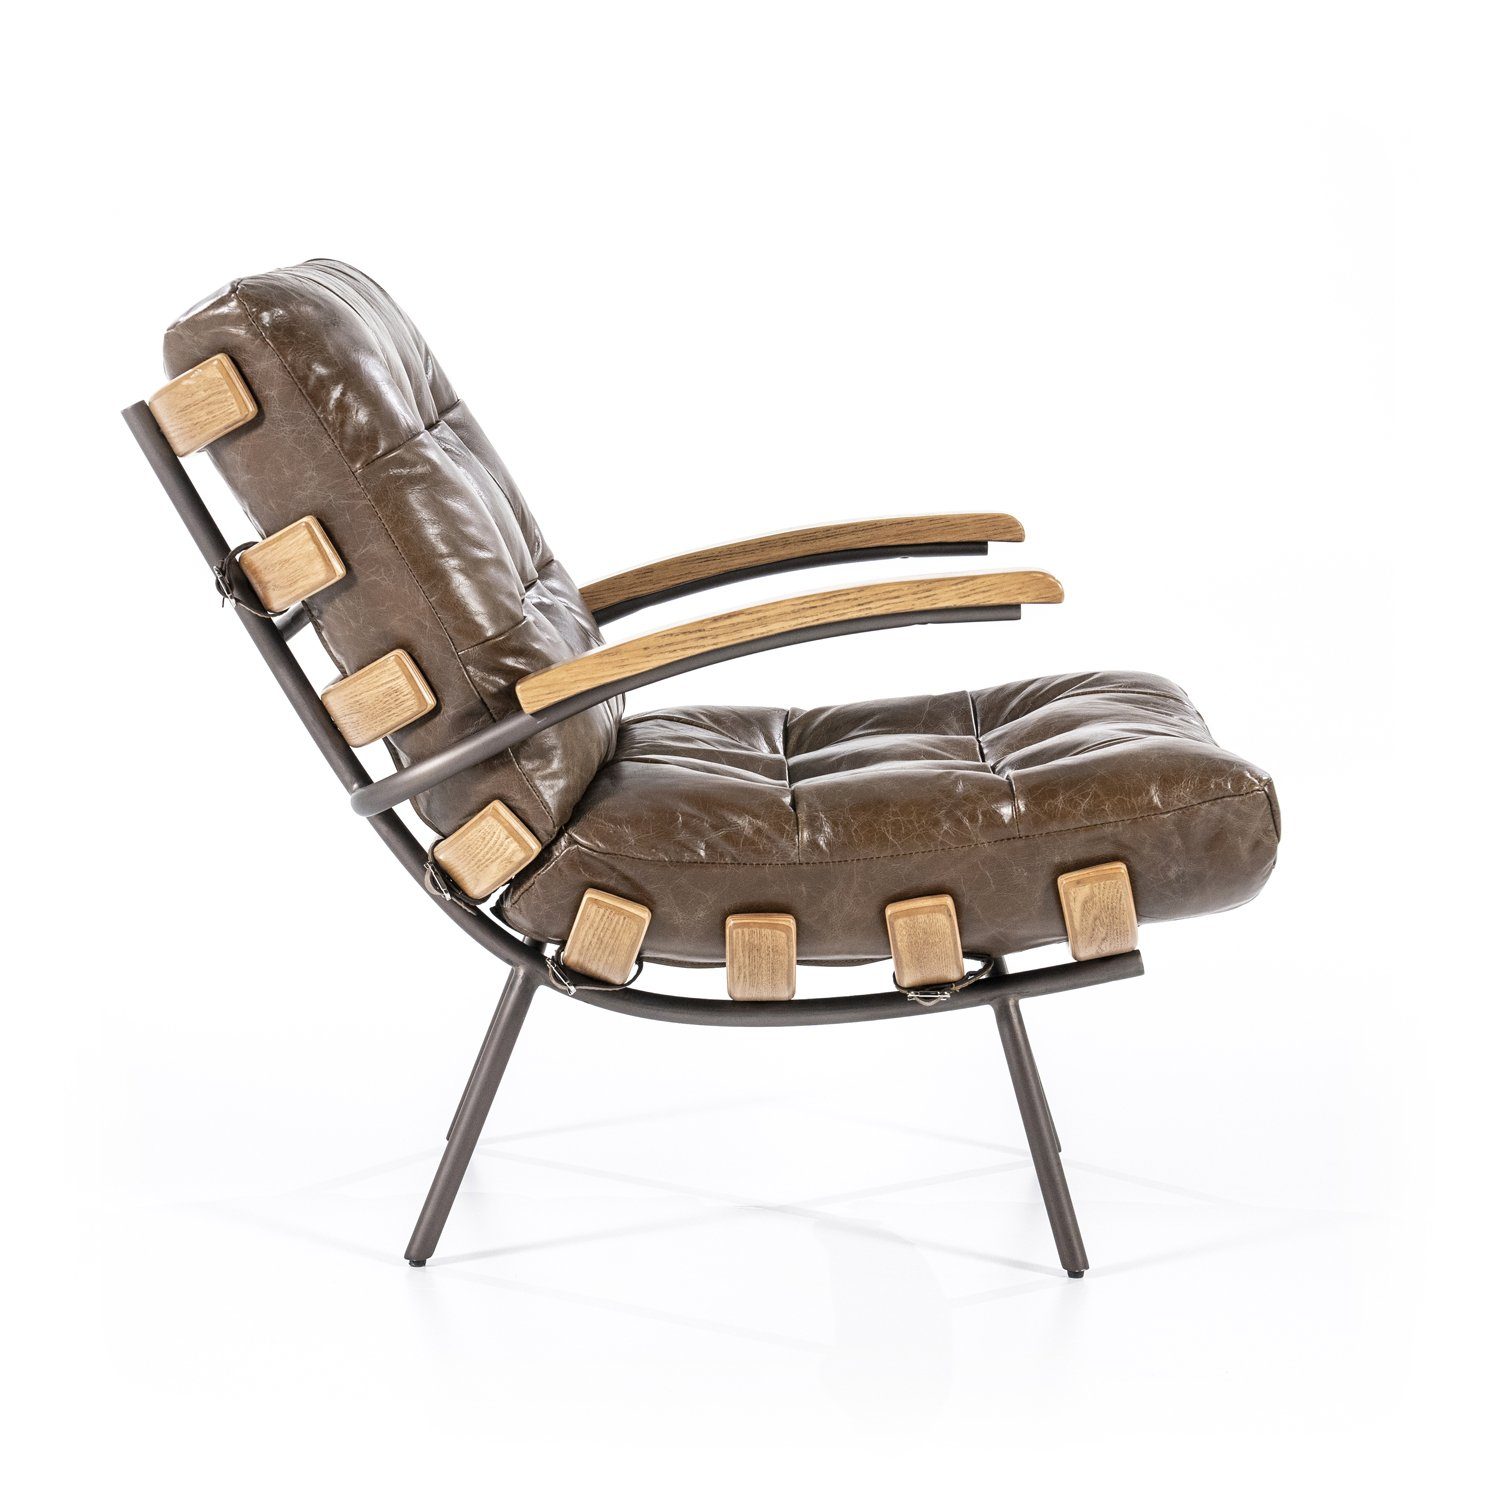 Maison ESTO Loungesessel Leder Java-Leder NICOLAS Ledersessel dunkelbraun aus Vintage, hochwertigem Sessel